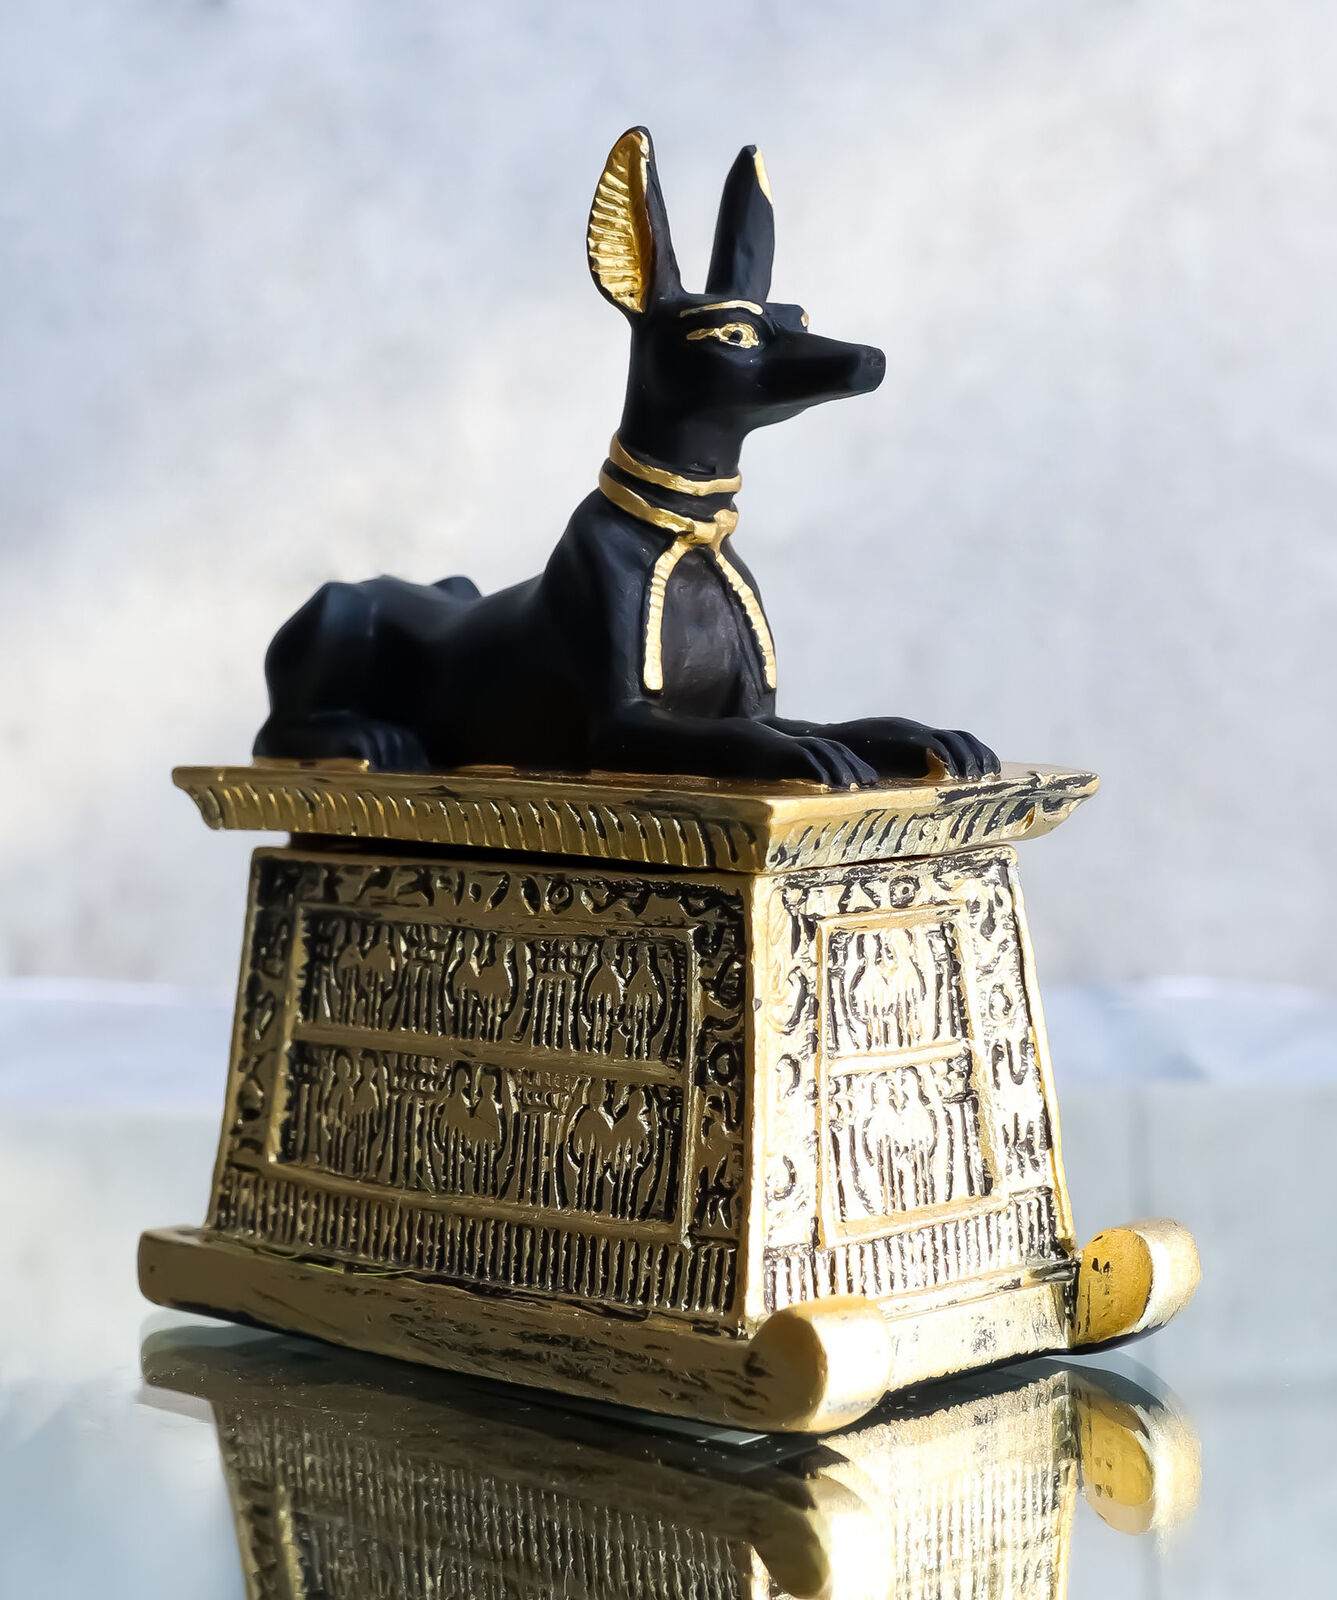 Ebros Egyptian God Hieroglyphic Anubis Dog Egyptian Miniature Cartouche Box